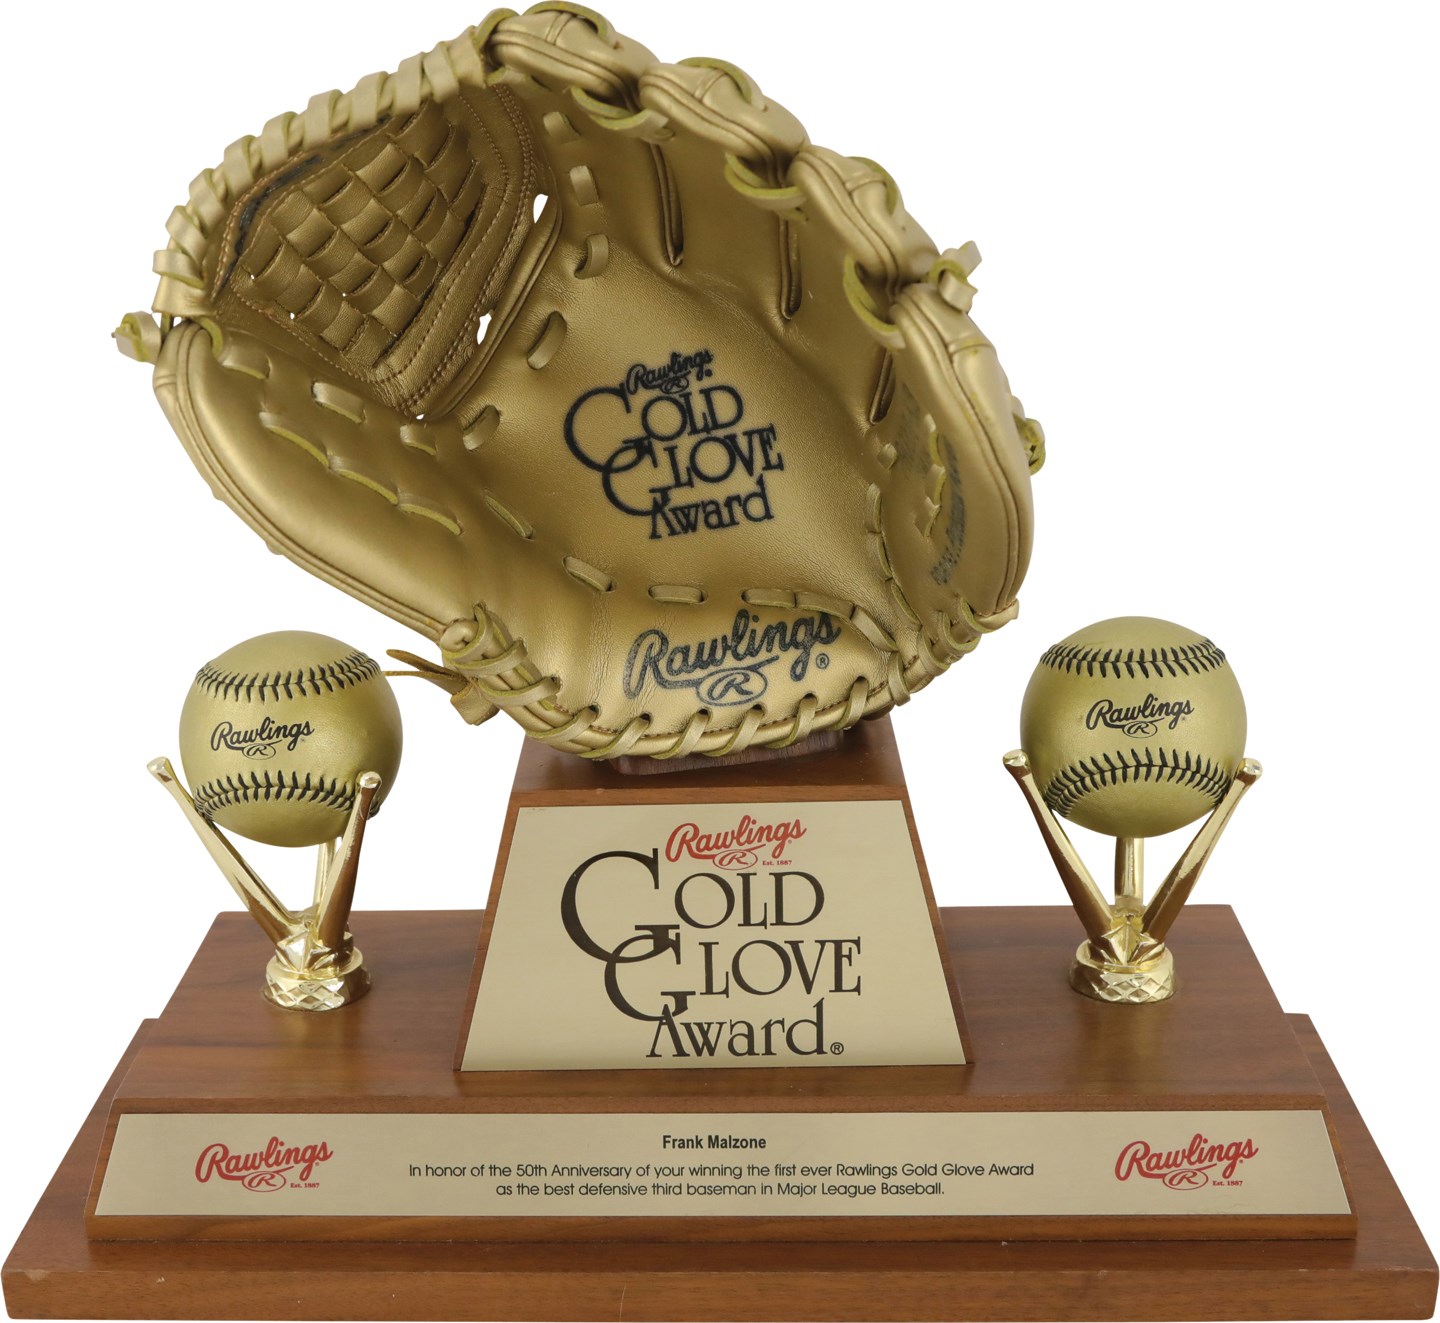 Frank Malzone 50th Anniversary Gold Glove Award Presented by Rawlings